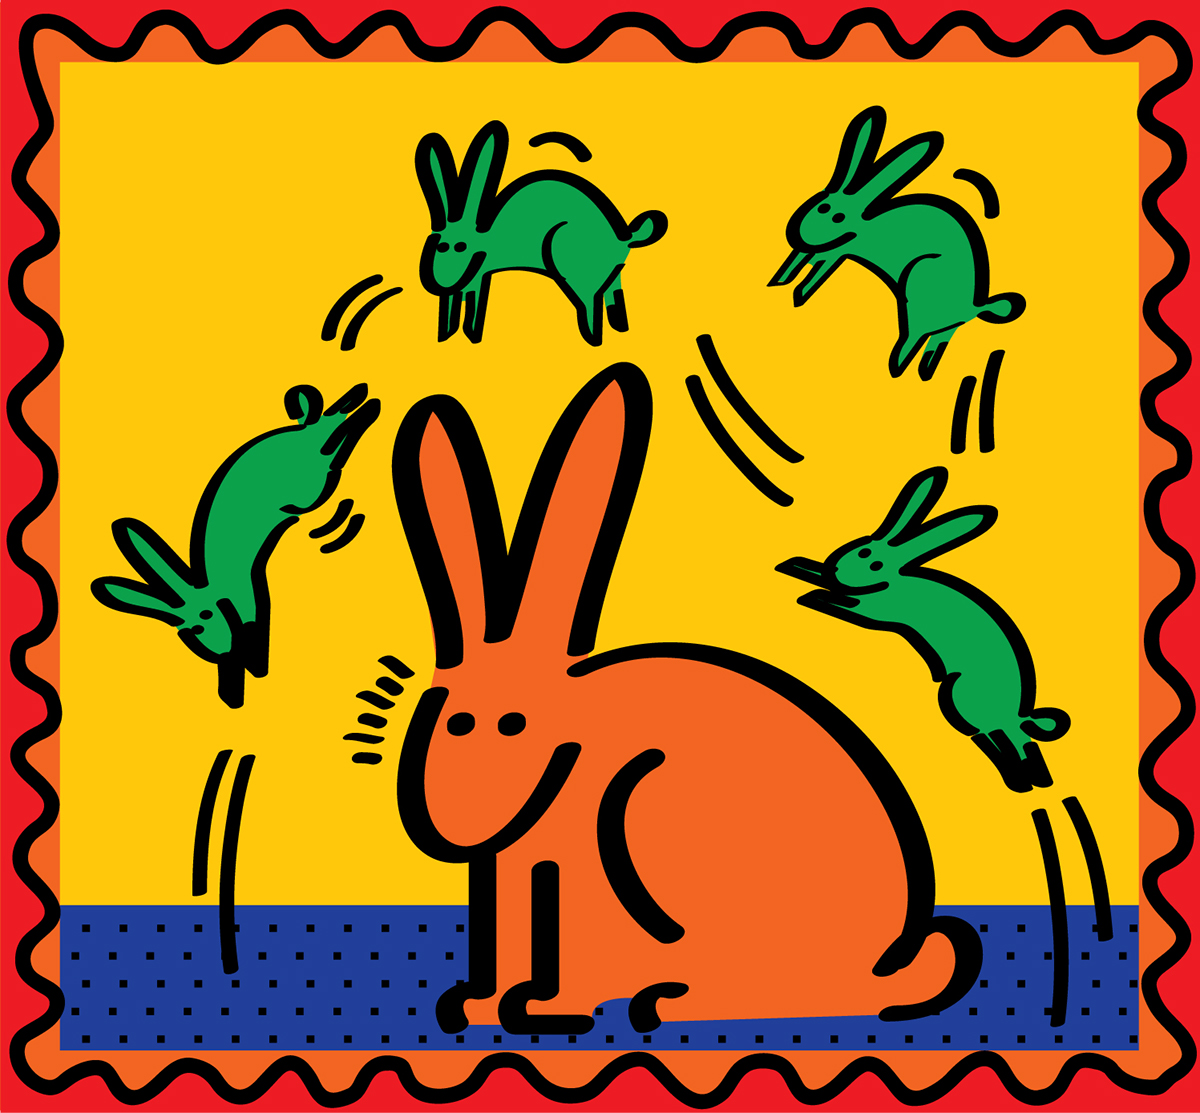 Adobe Portfolio bunny rabbit bunnies pop culture